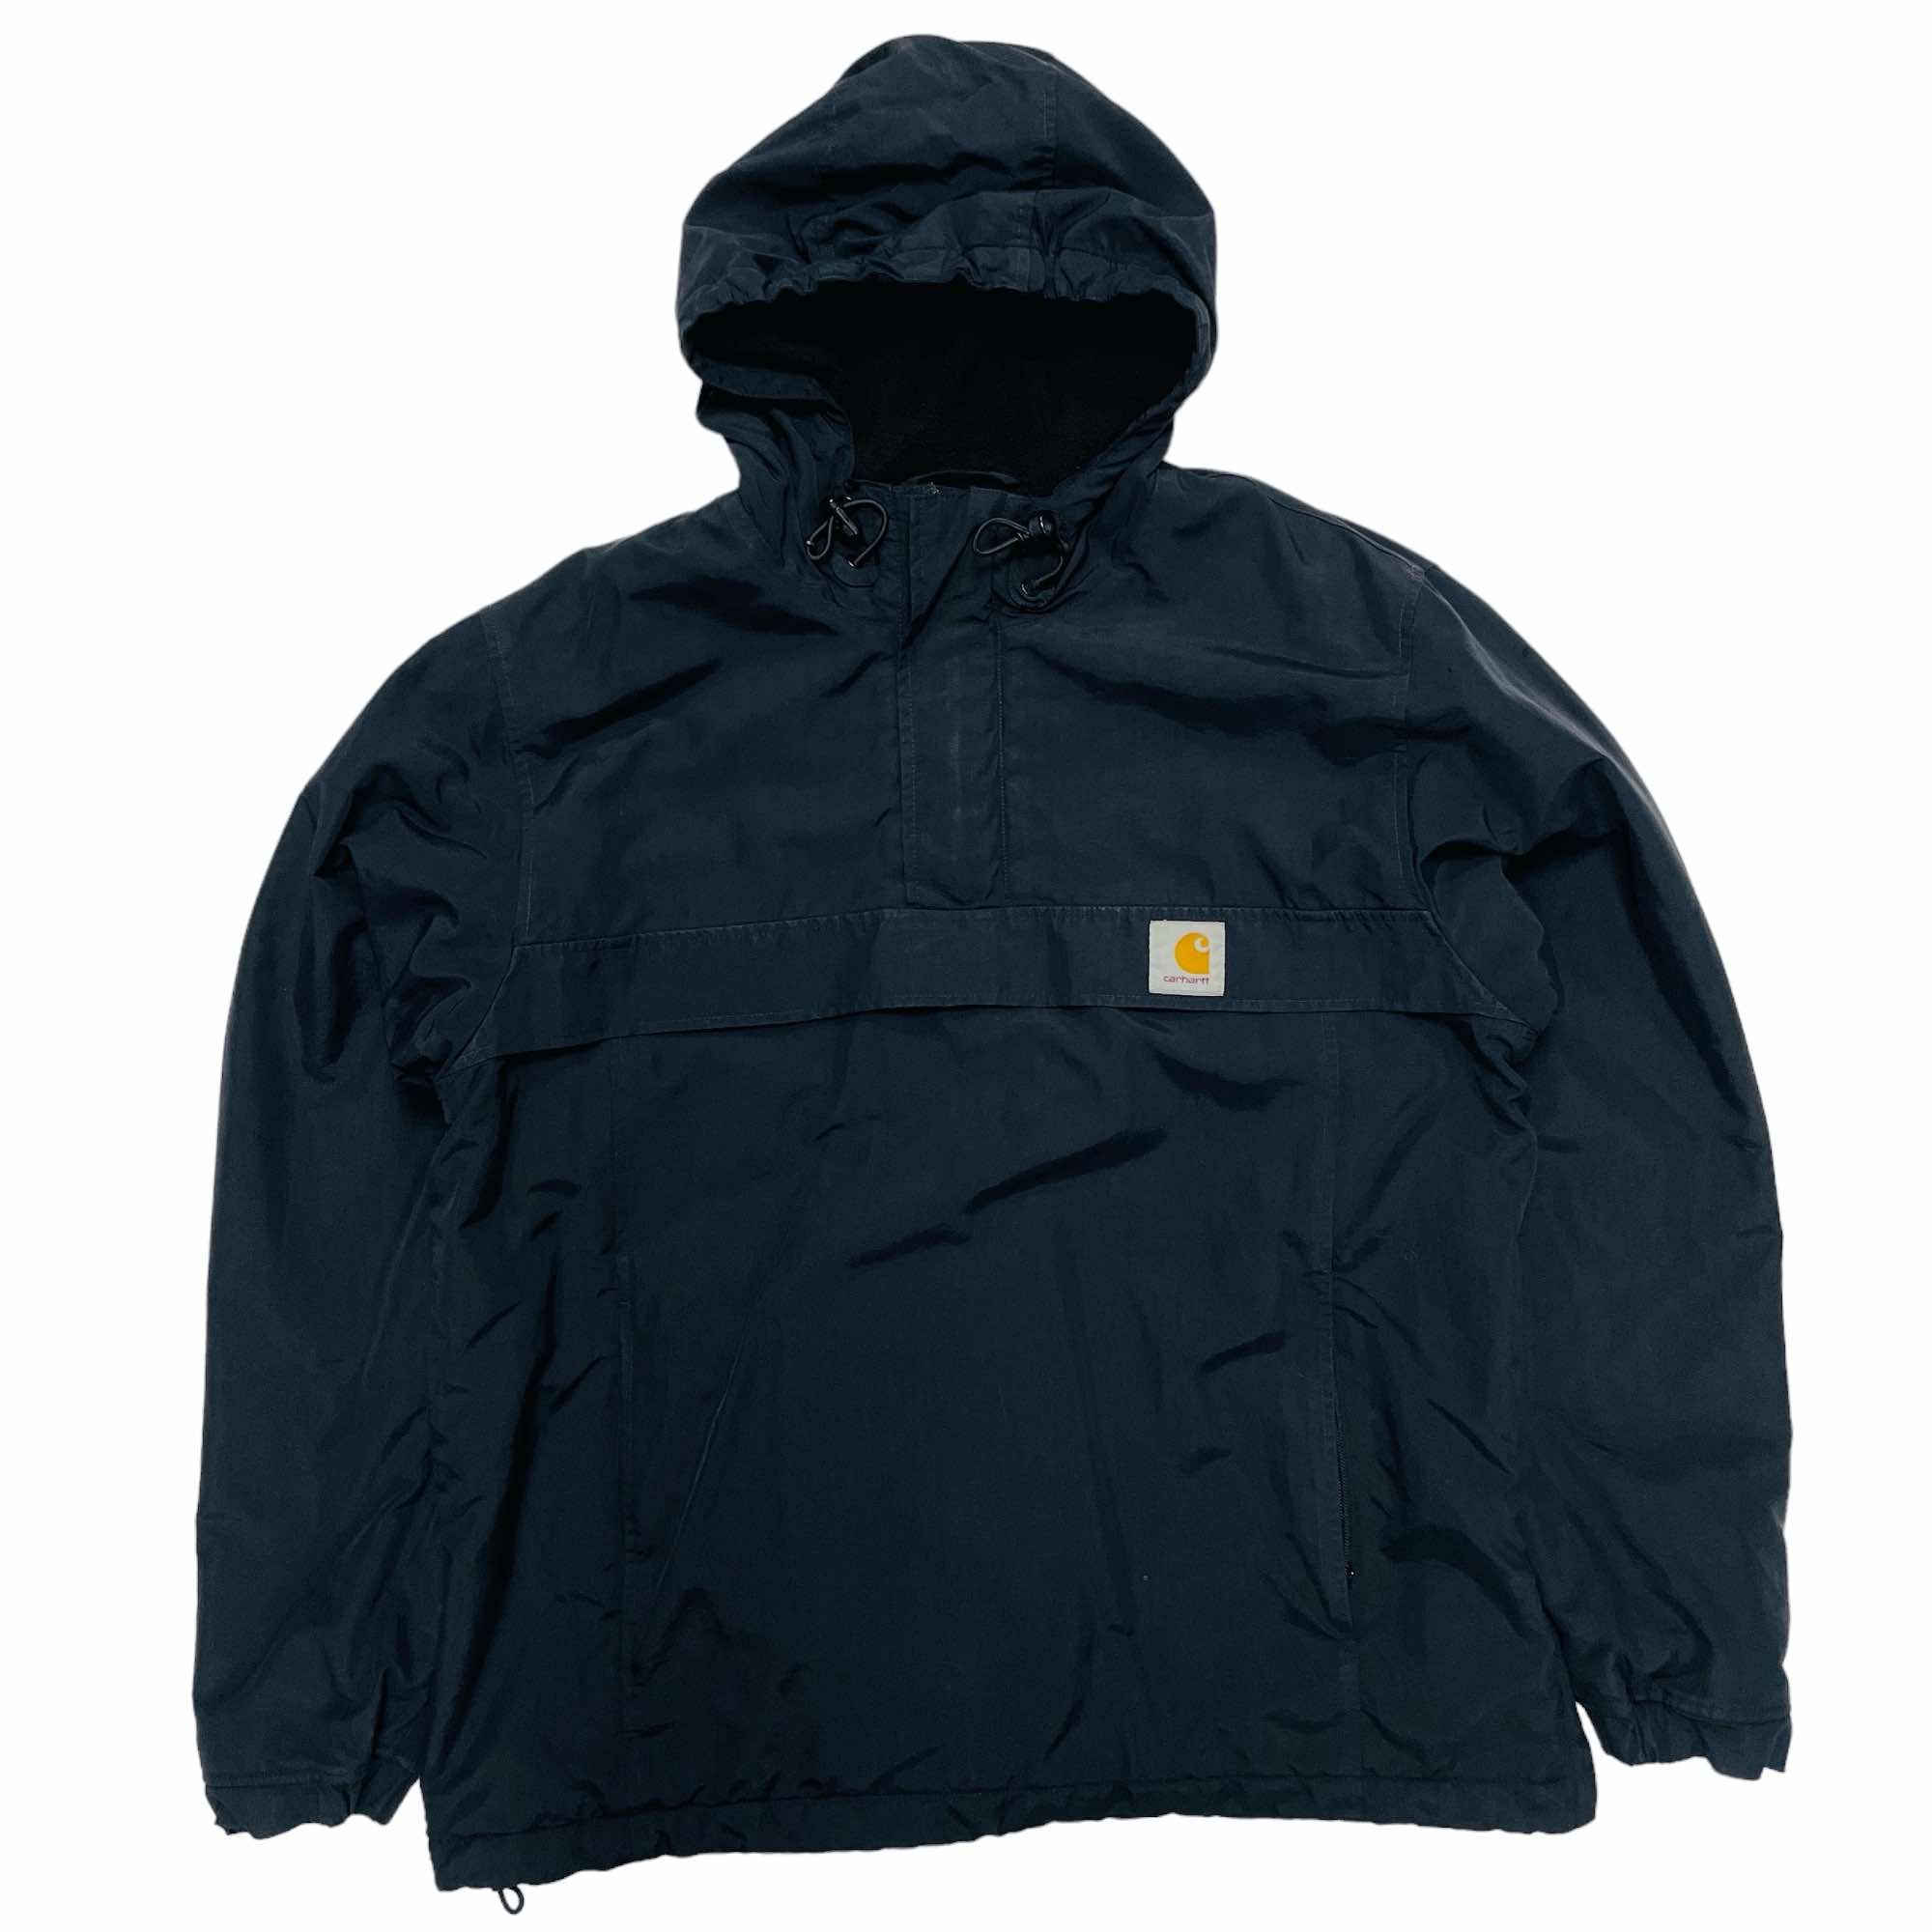 Carhartt Pullover Jacket - Large